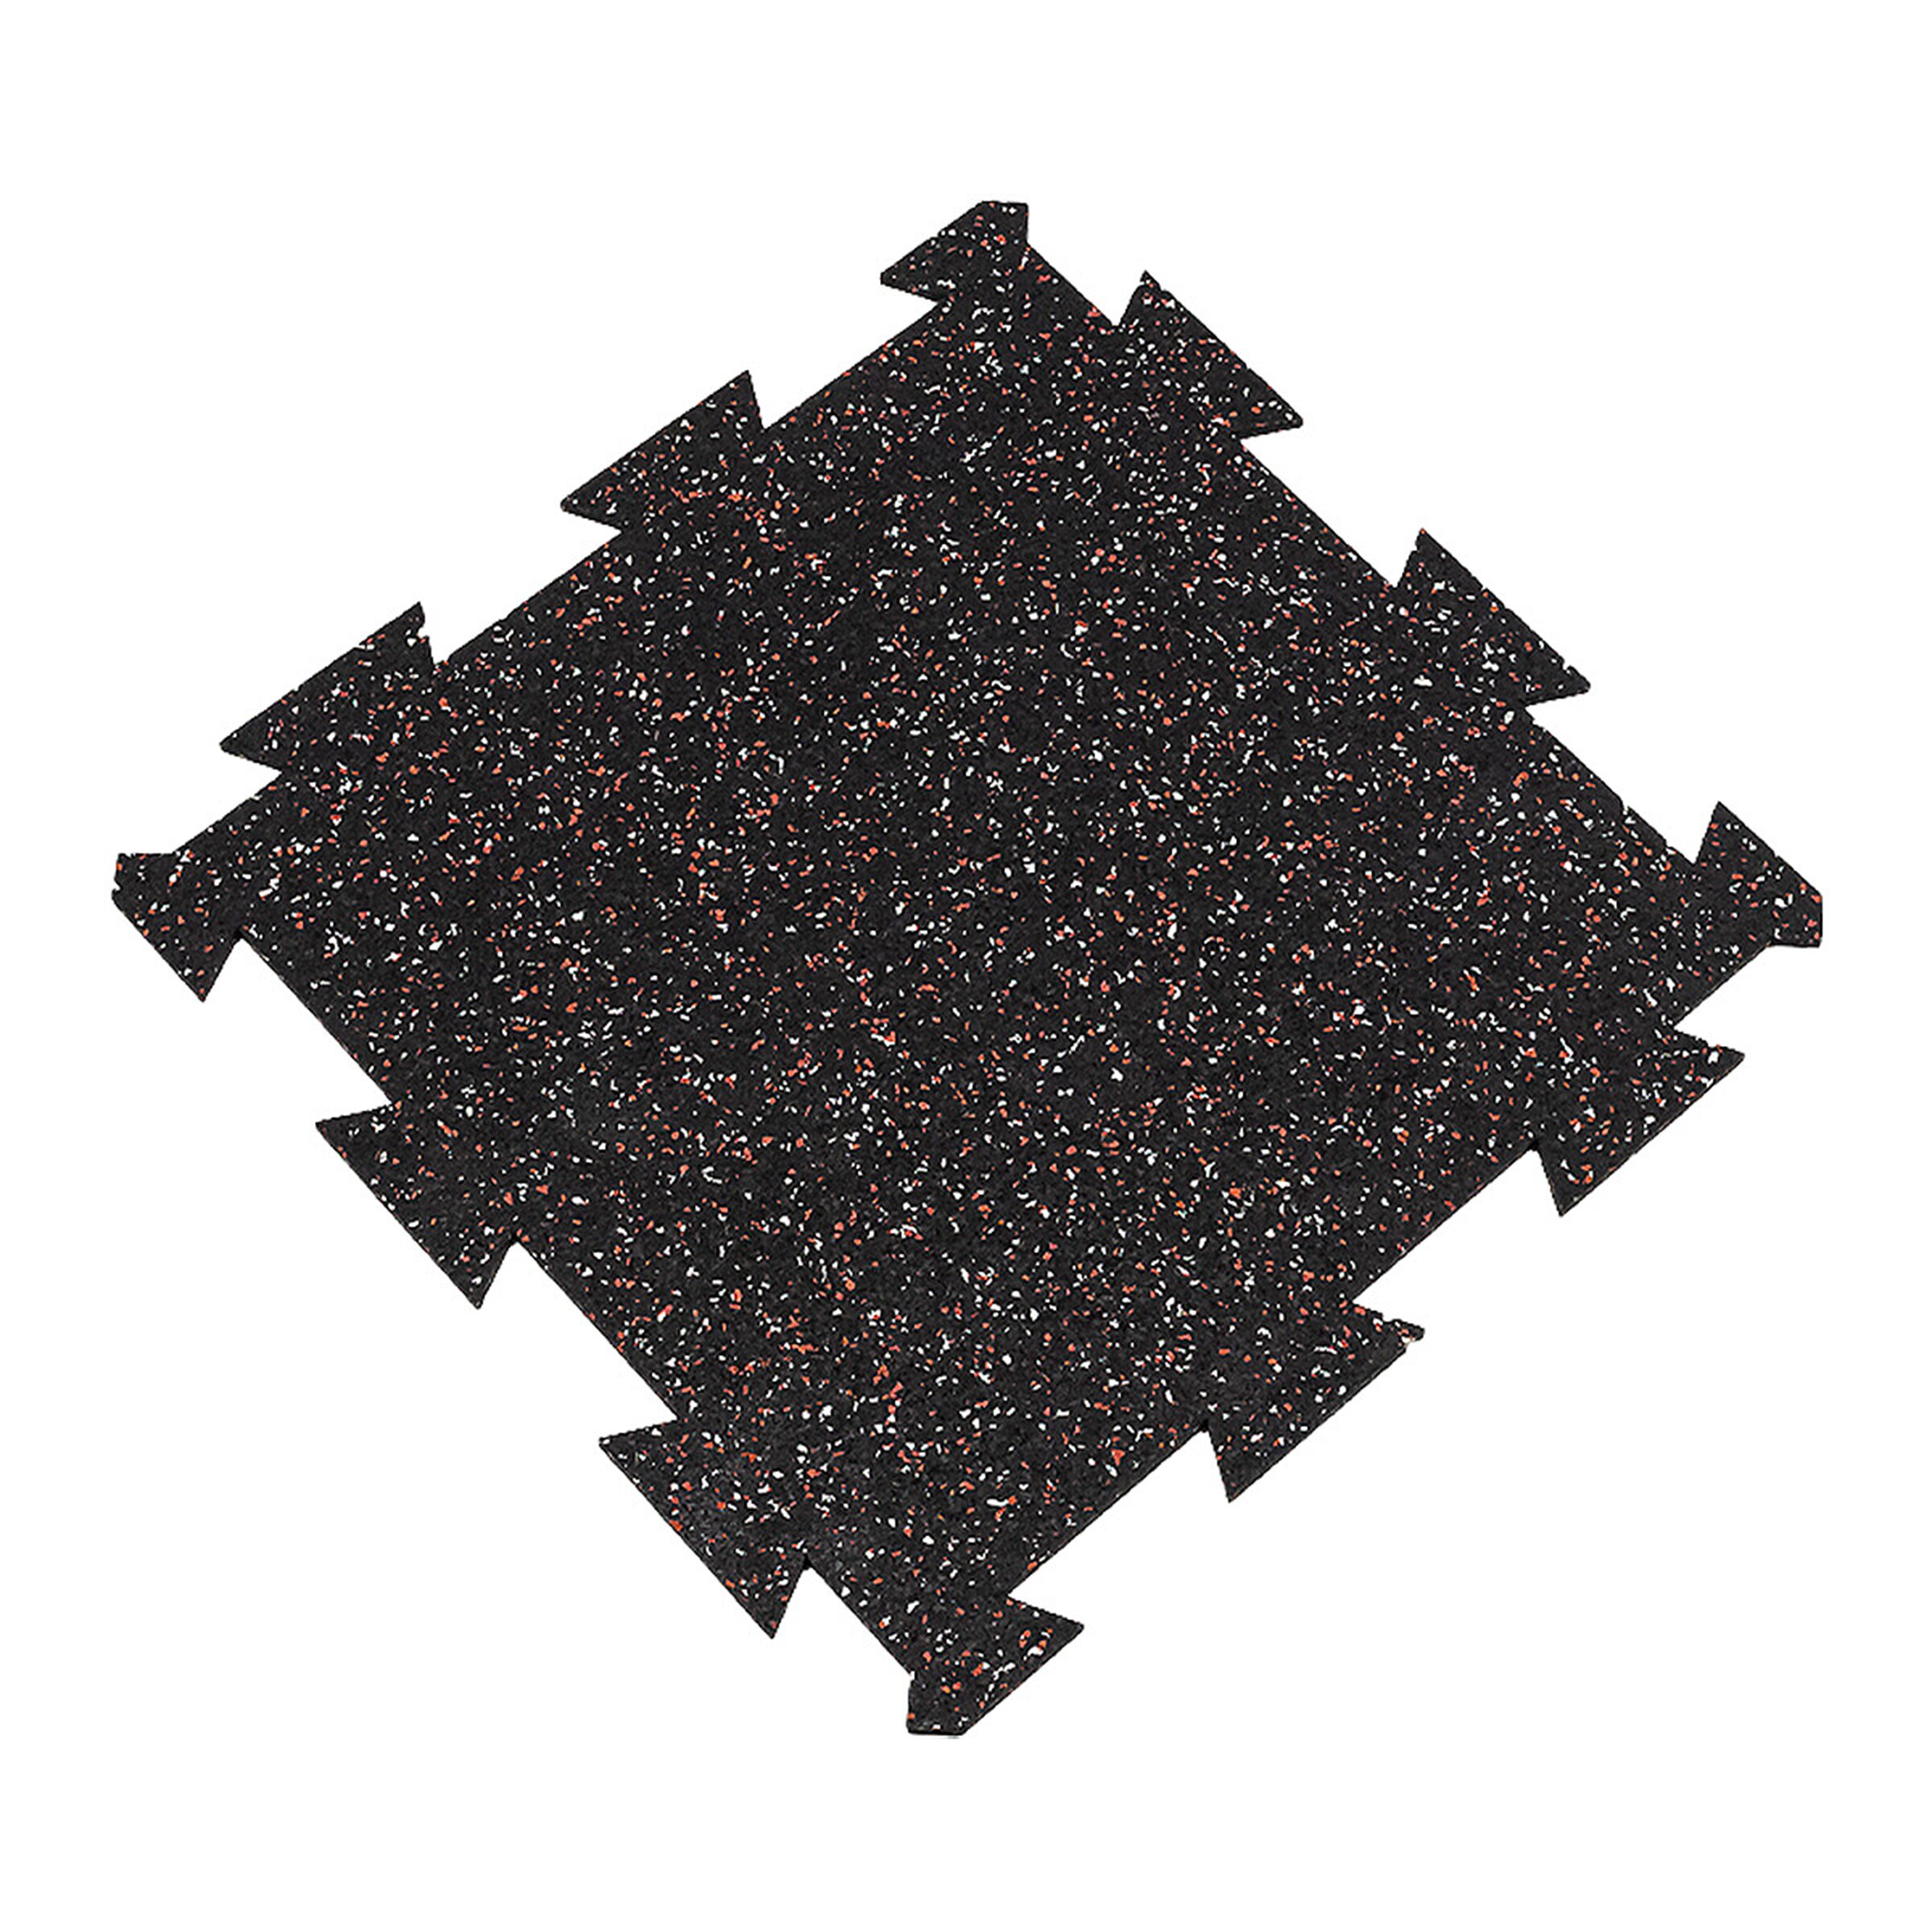 Černo-bílo-červená podlahová guma (puzzle - střed) FLOMA FitFlo SF1050 - délka 50 cm, šířka 50 cm, výška 0,8 cm